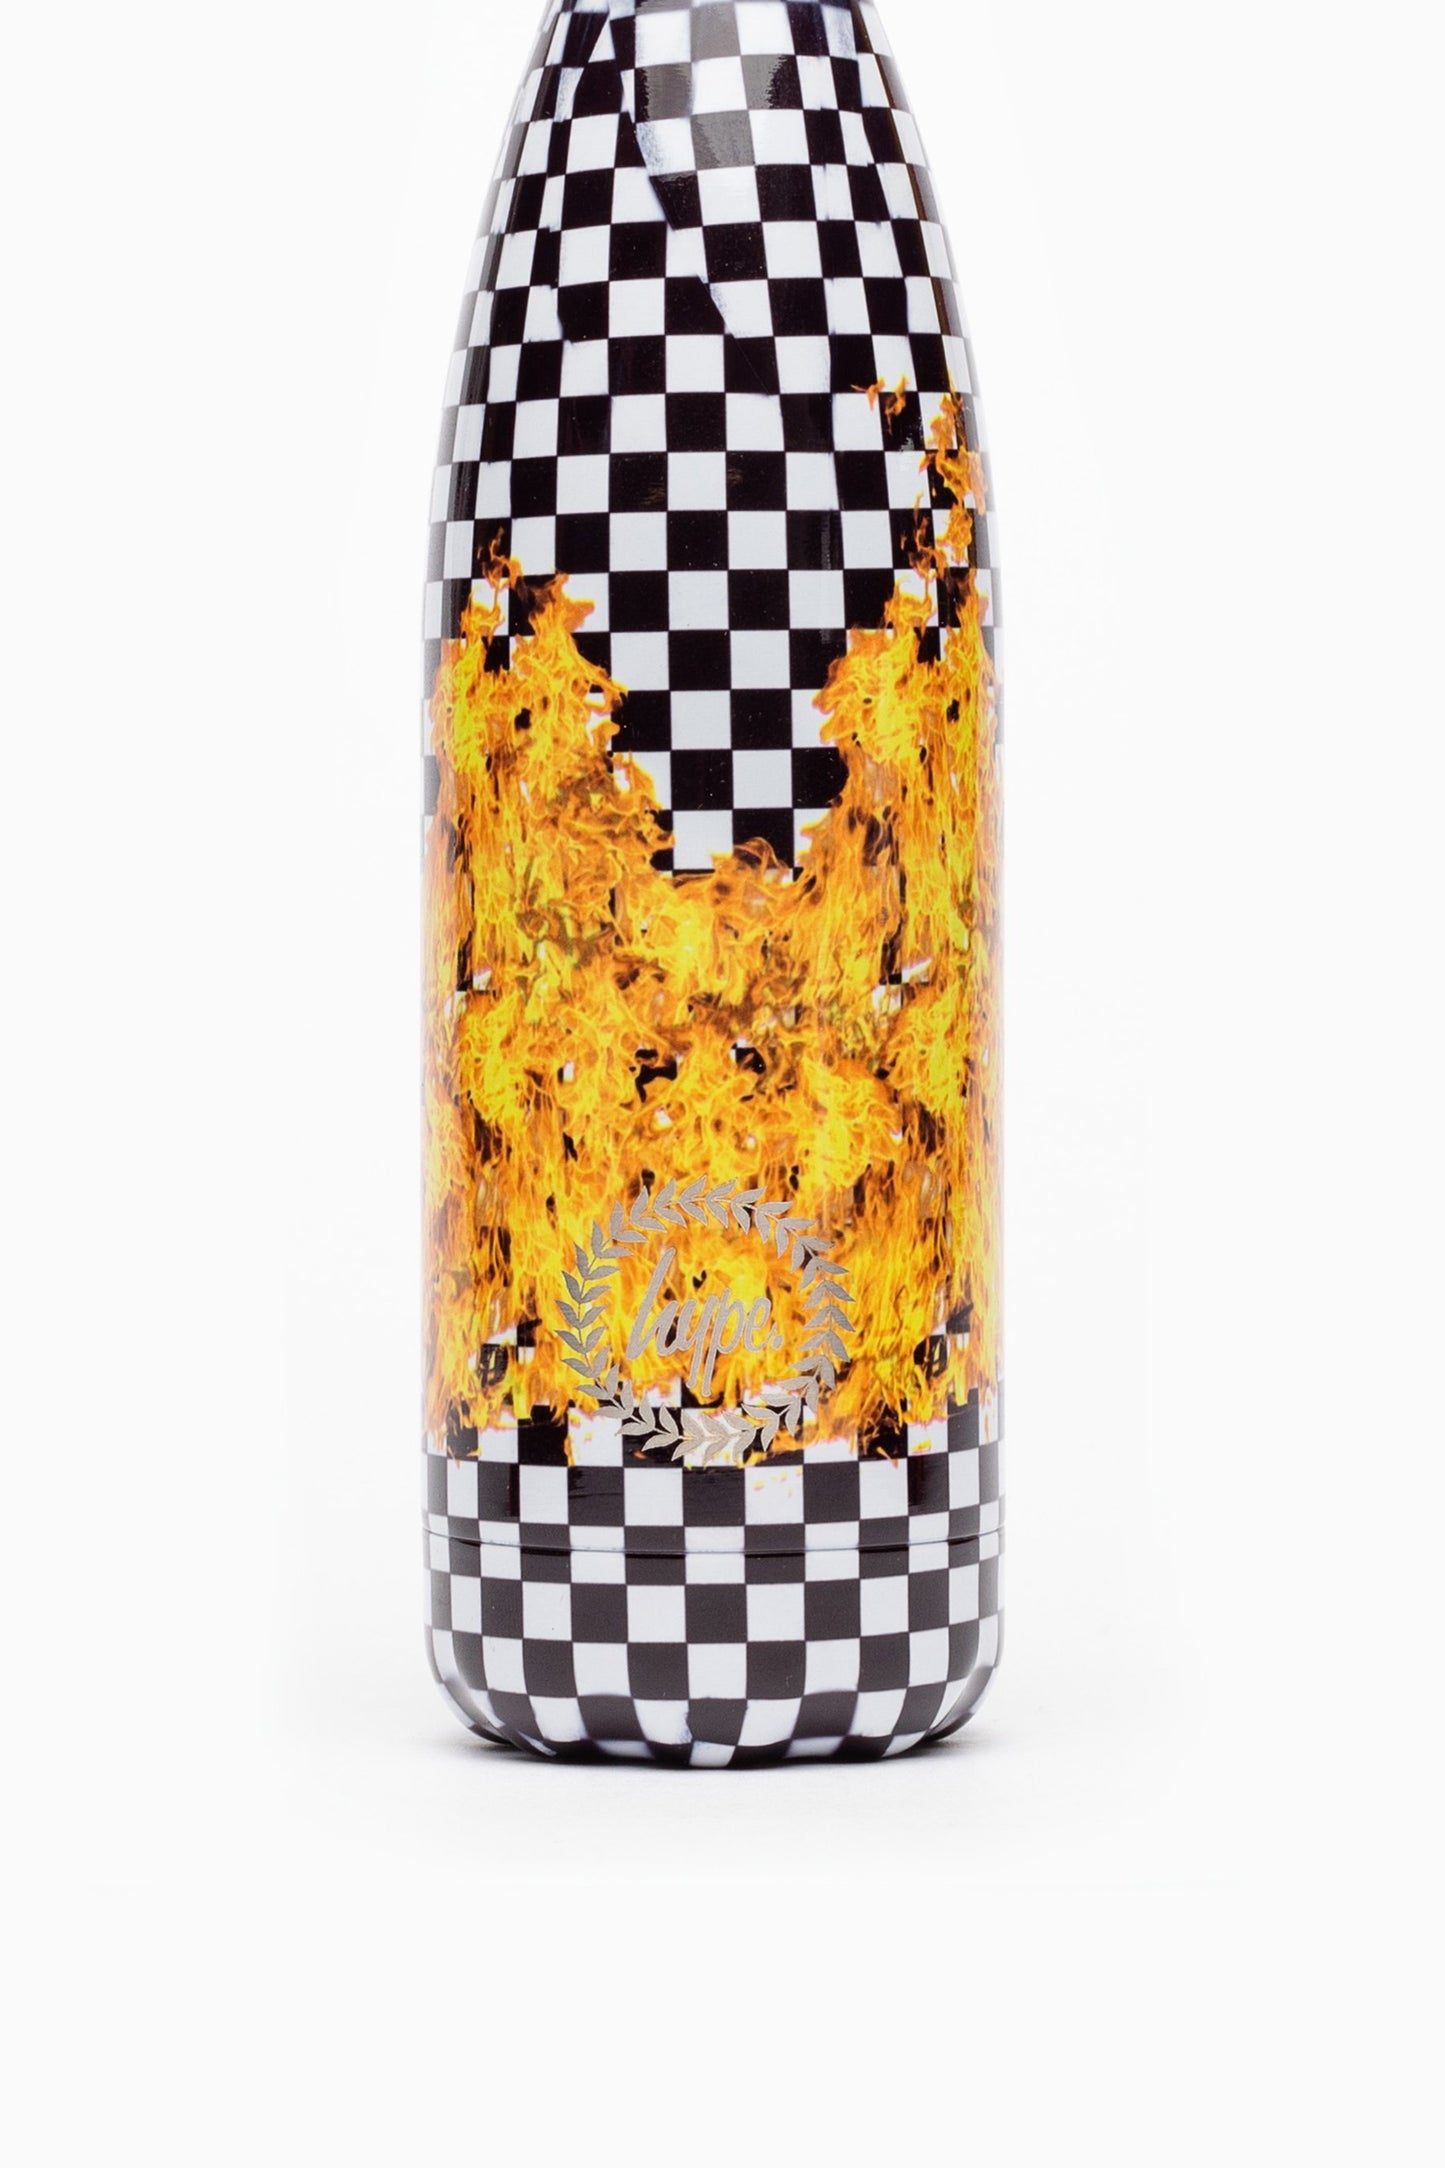 Hype Orange Flame Metal Reusable Bottle